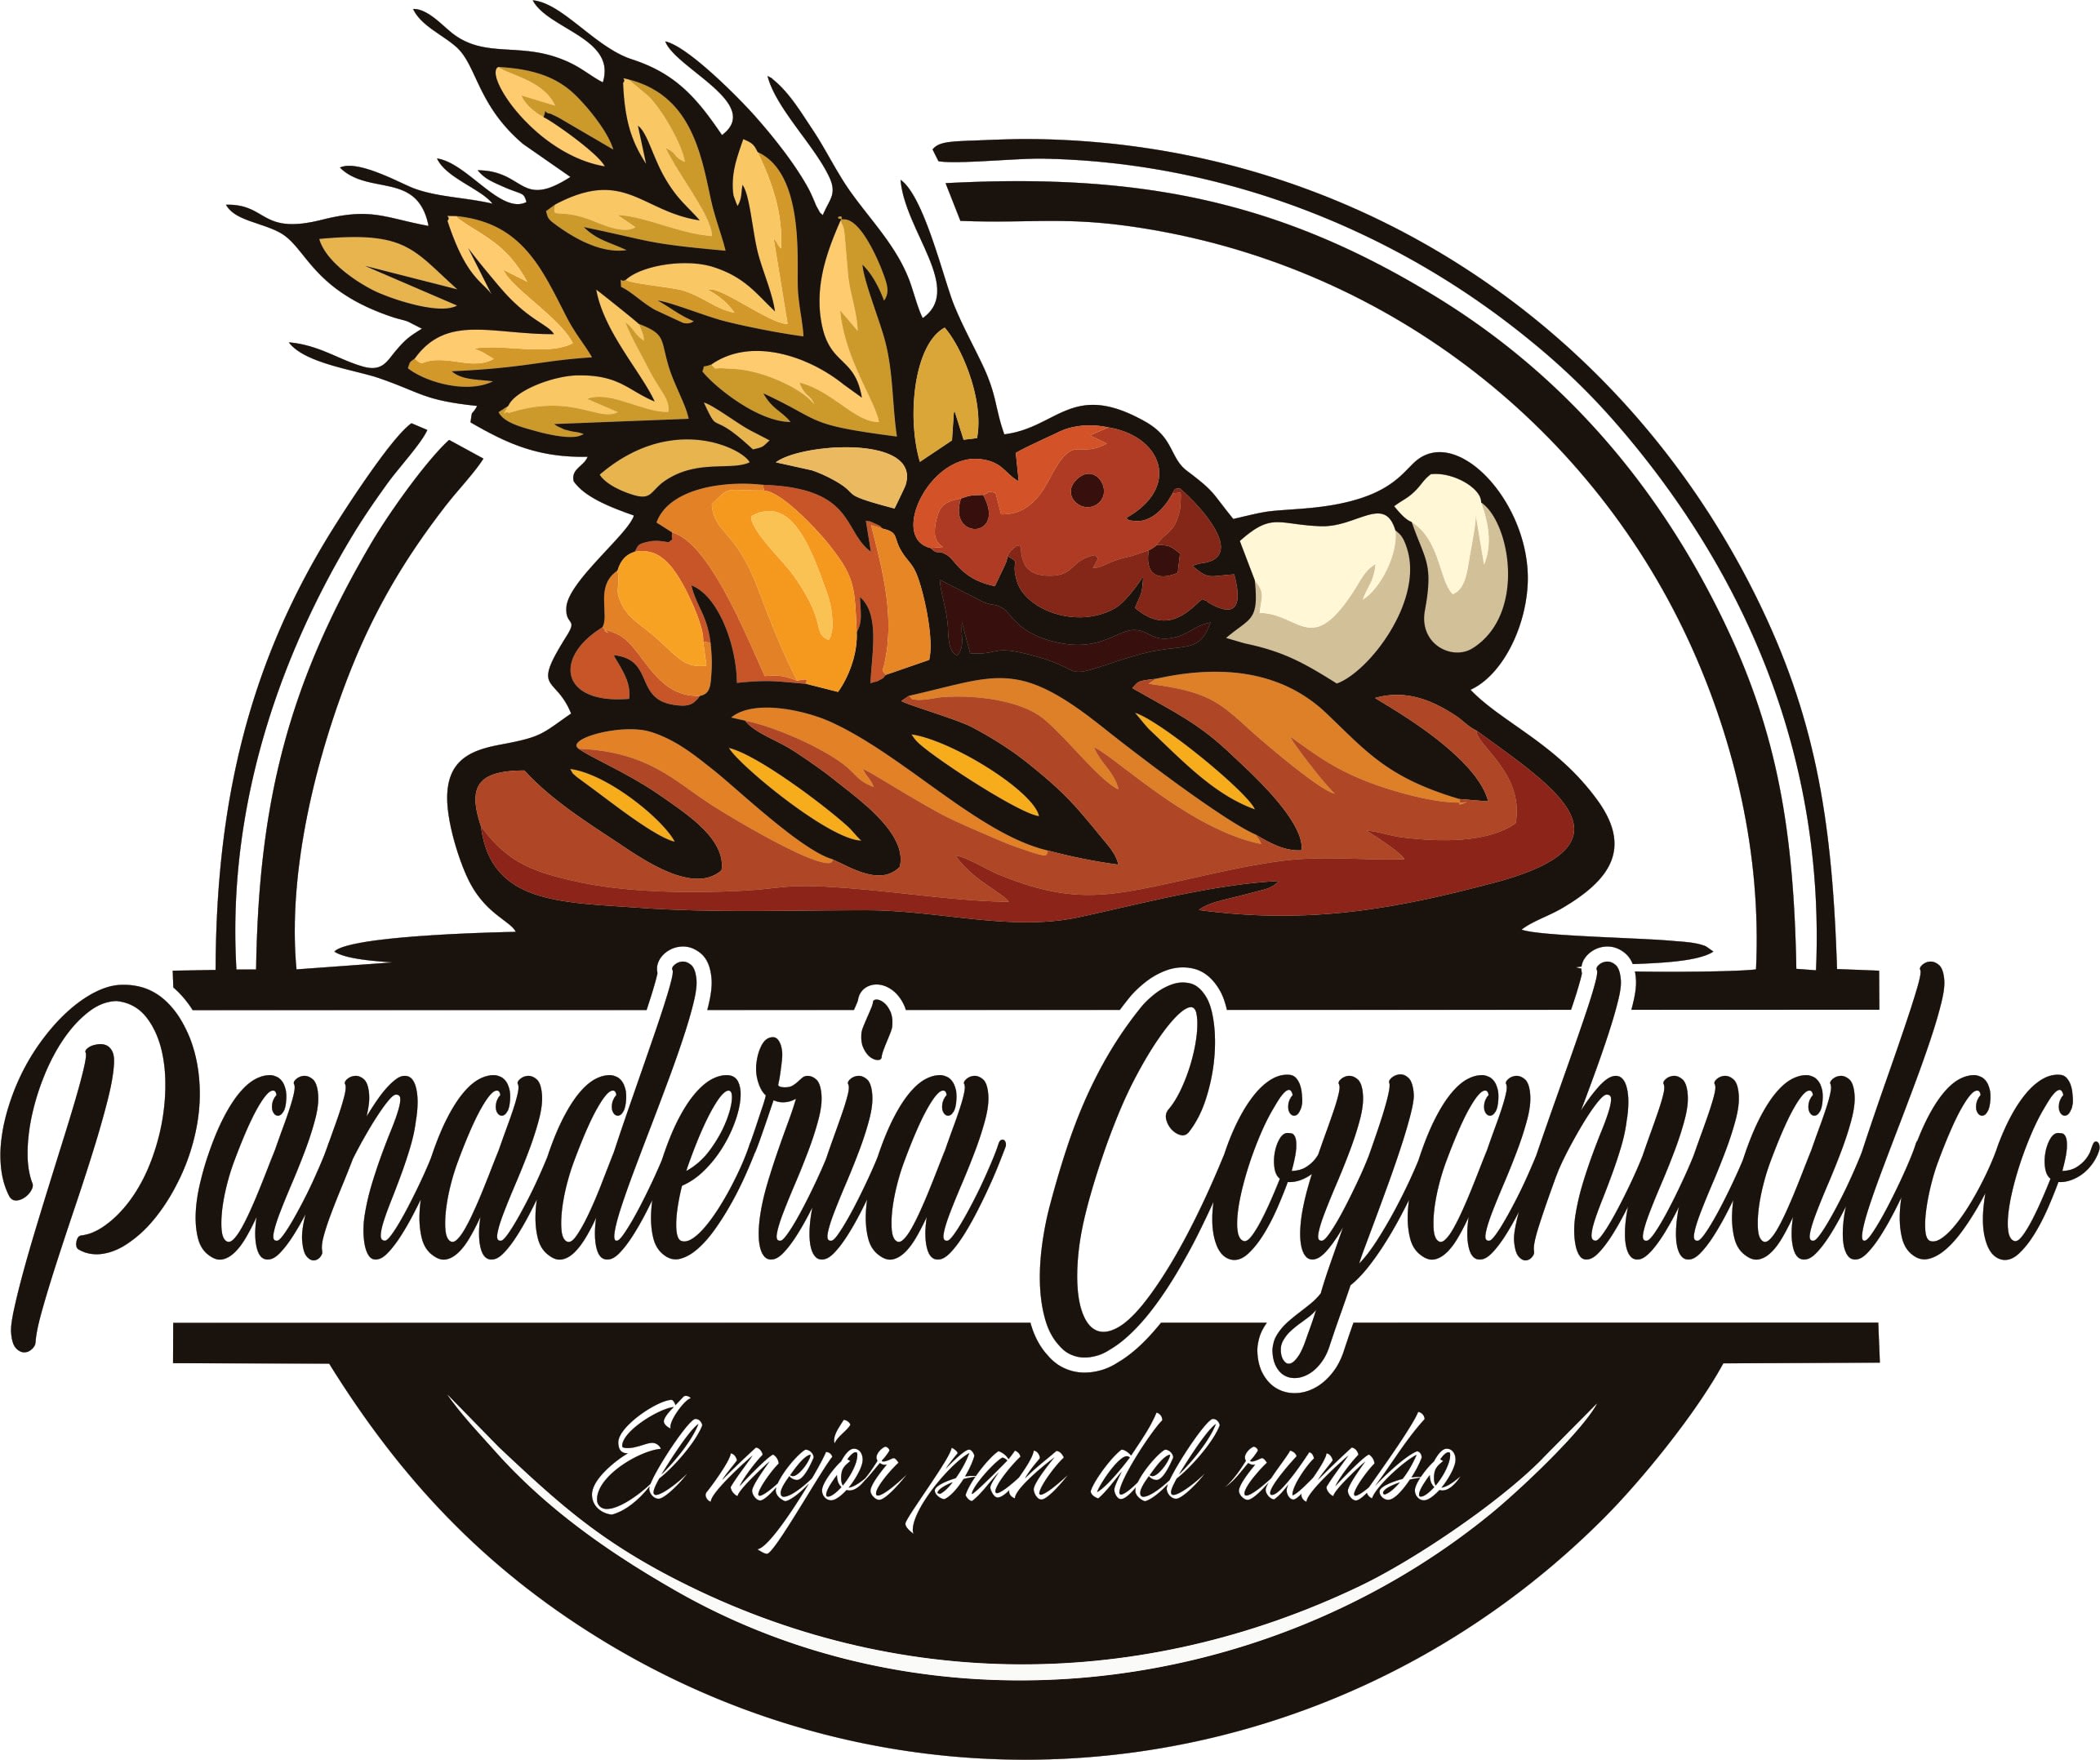 Panadería Coyahualco